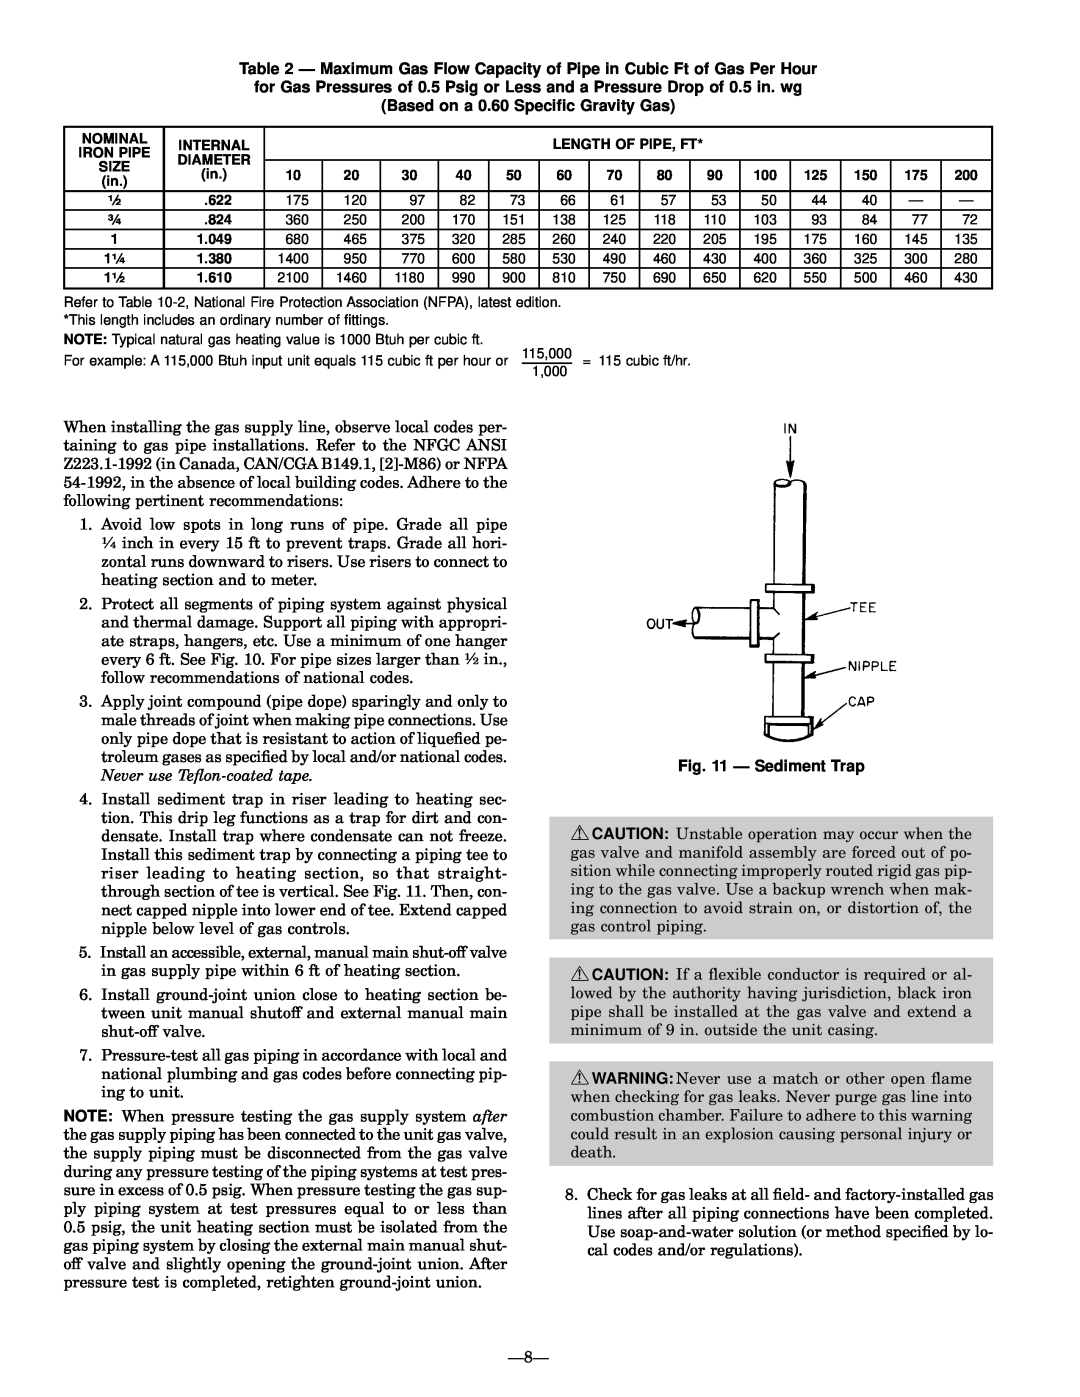 Bryant 581B installation instructions Based on a 0.60 Specic Gravity Gas, Ð Sediment Trap 